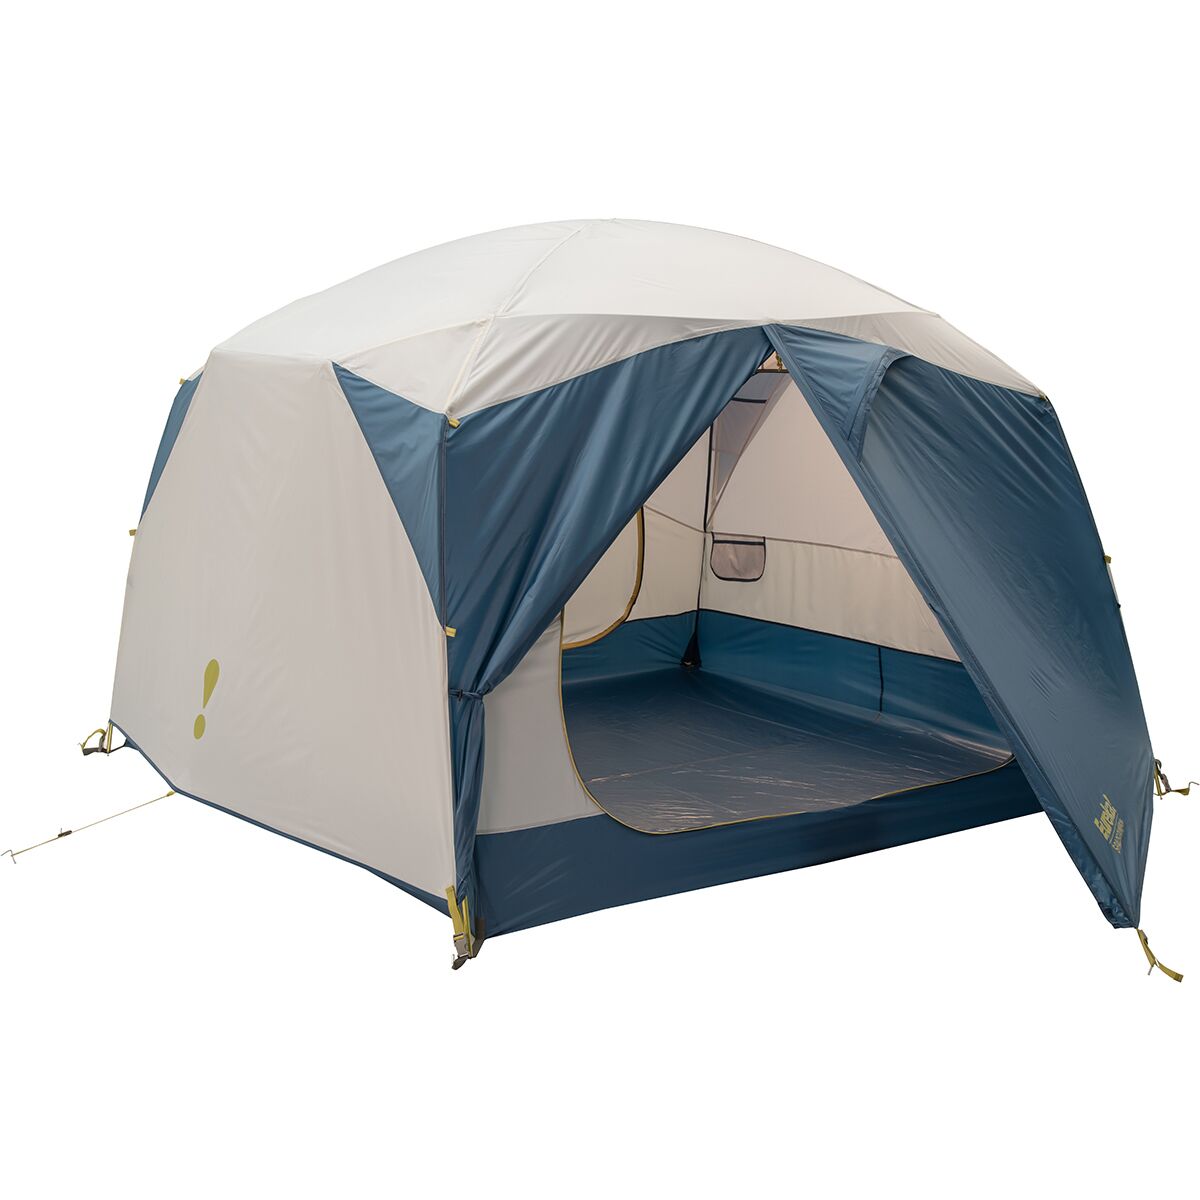 Eureka Space Camp Tent: 6-Person 3-Season